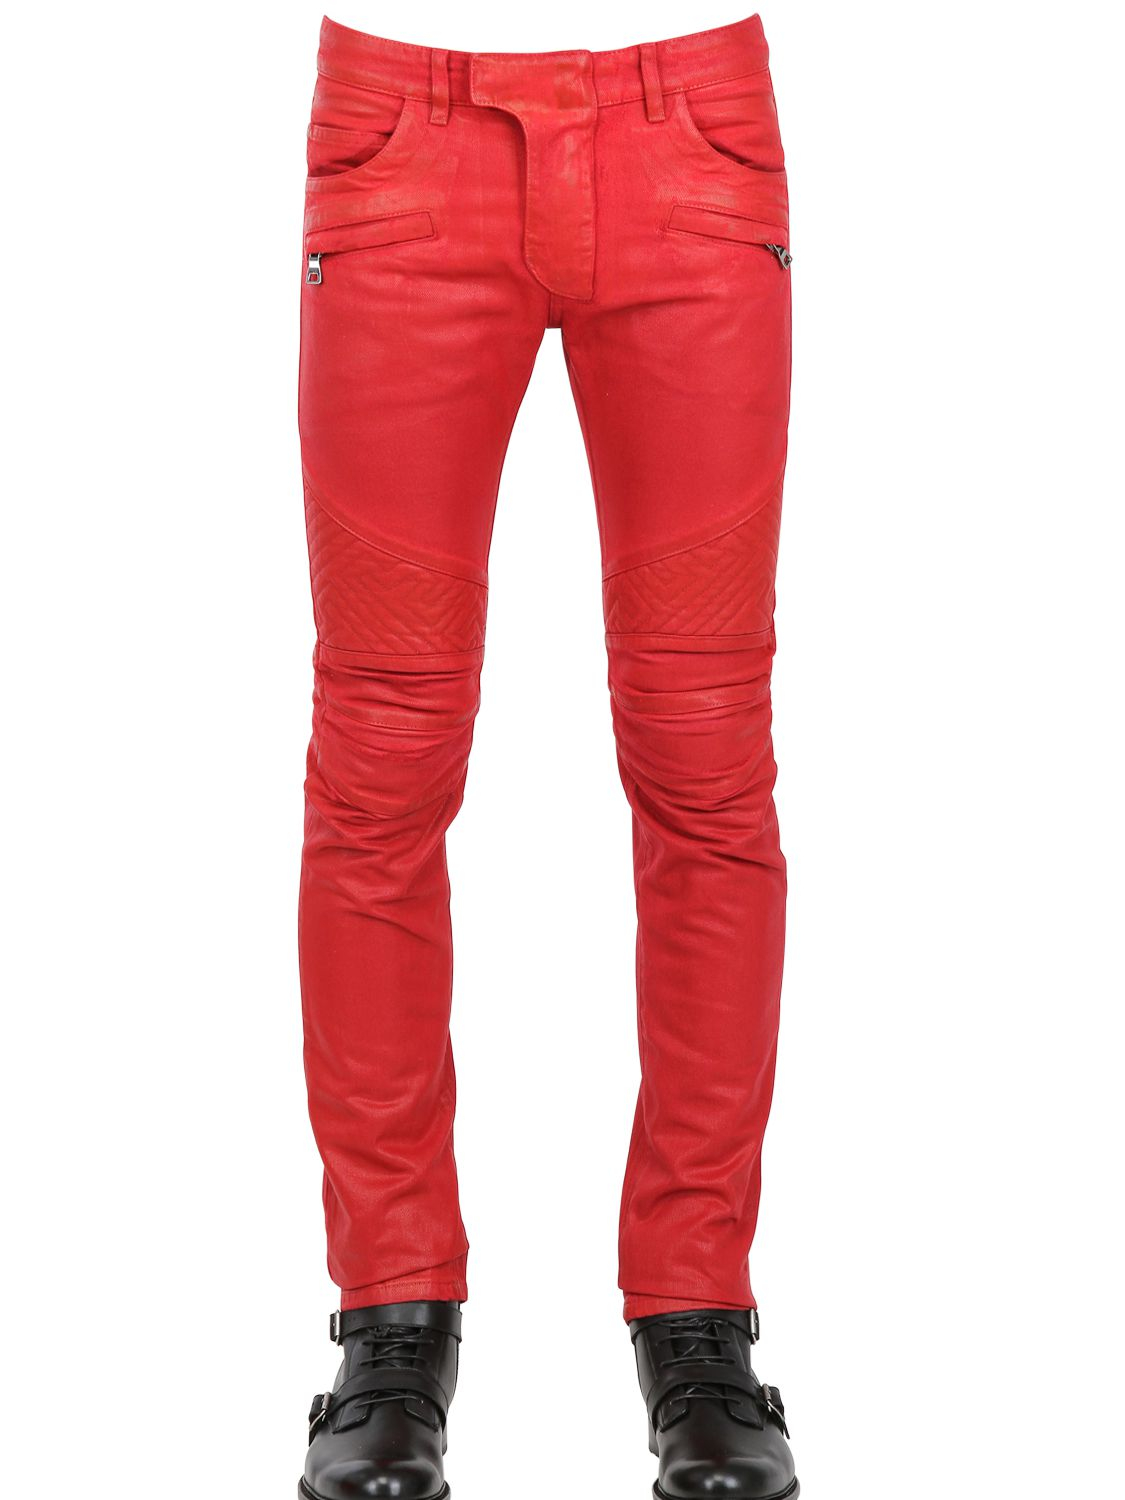 hot sell latest man Balmain jeans, fashion Balmain jeans, Balmain denim  pants - BALMAIN (China Trading Company) - Jeans - Apparel & Fashion